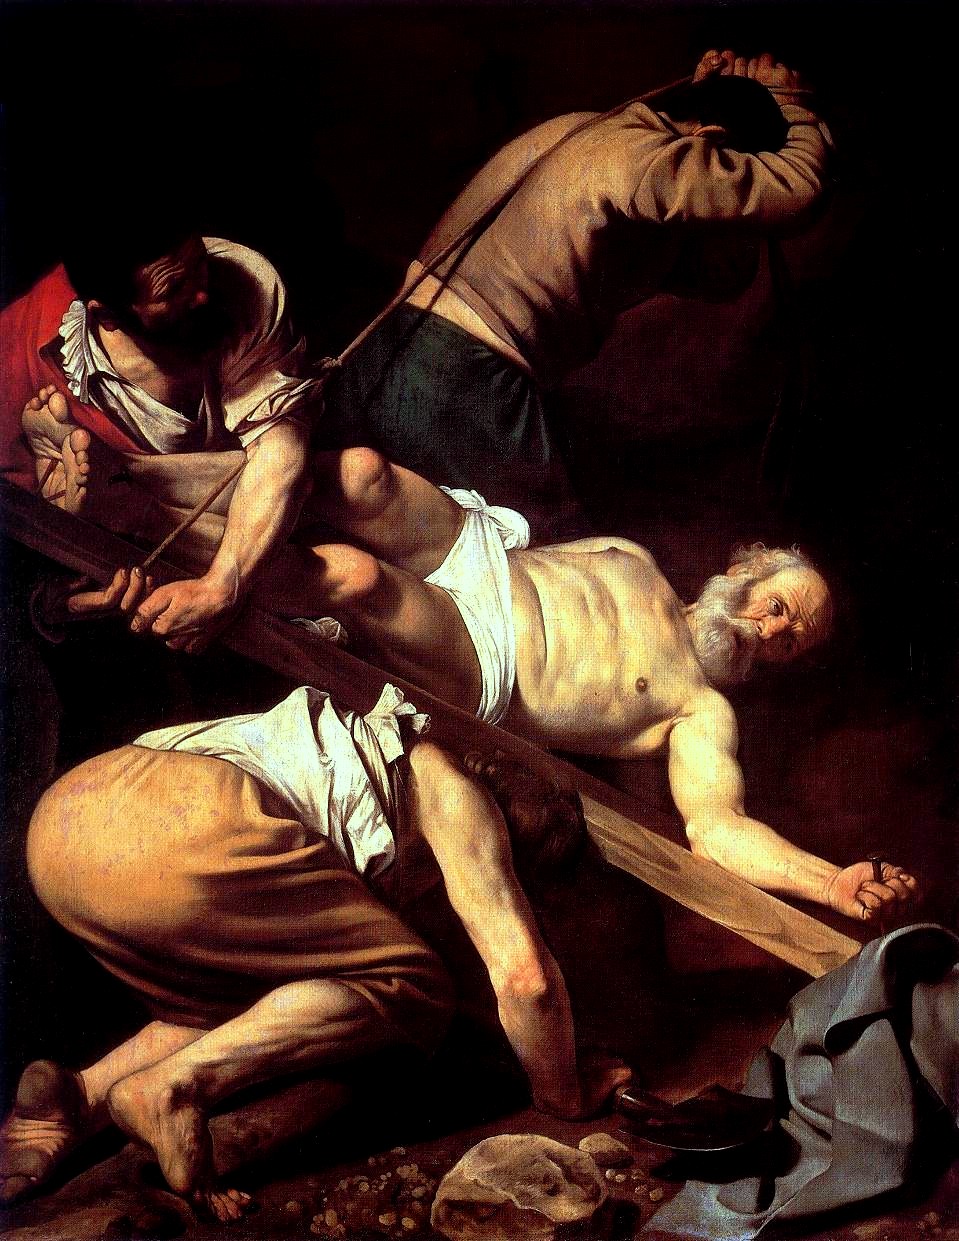 Caravaggio, Crucifixion of St. Peter, 1601,230 x 175 cm, Cerasi Chapel, Santa Maria del Populo, Rome (Image public domain)